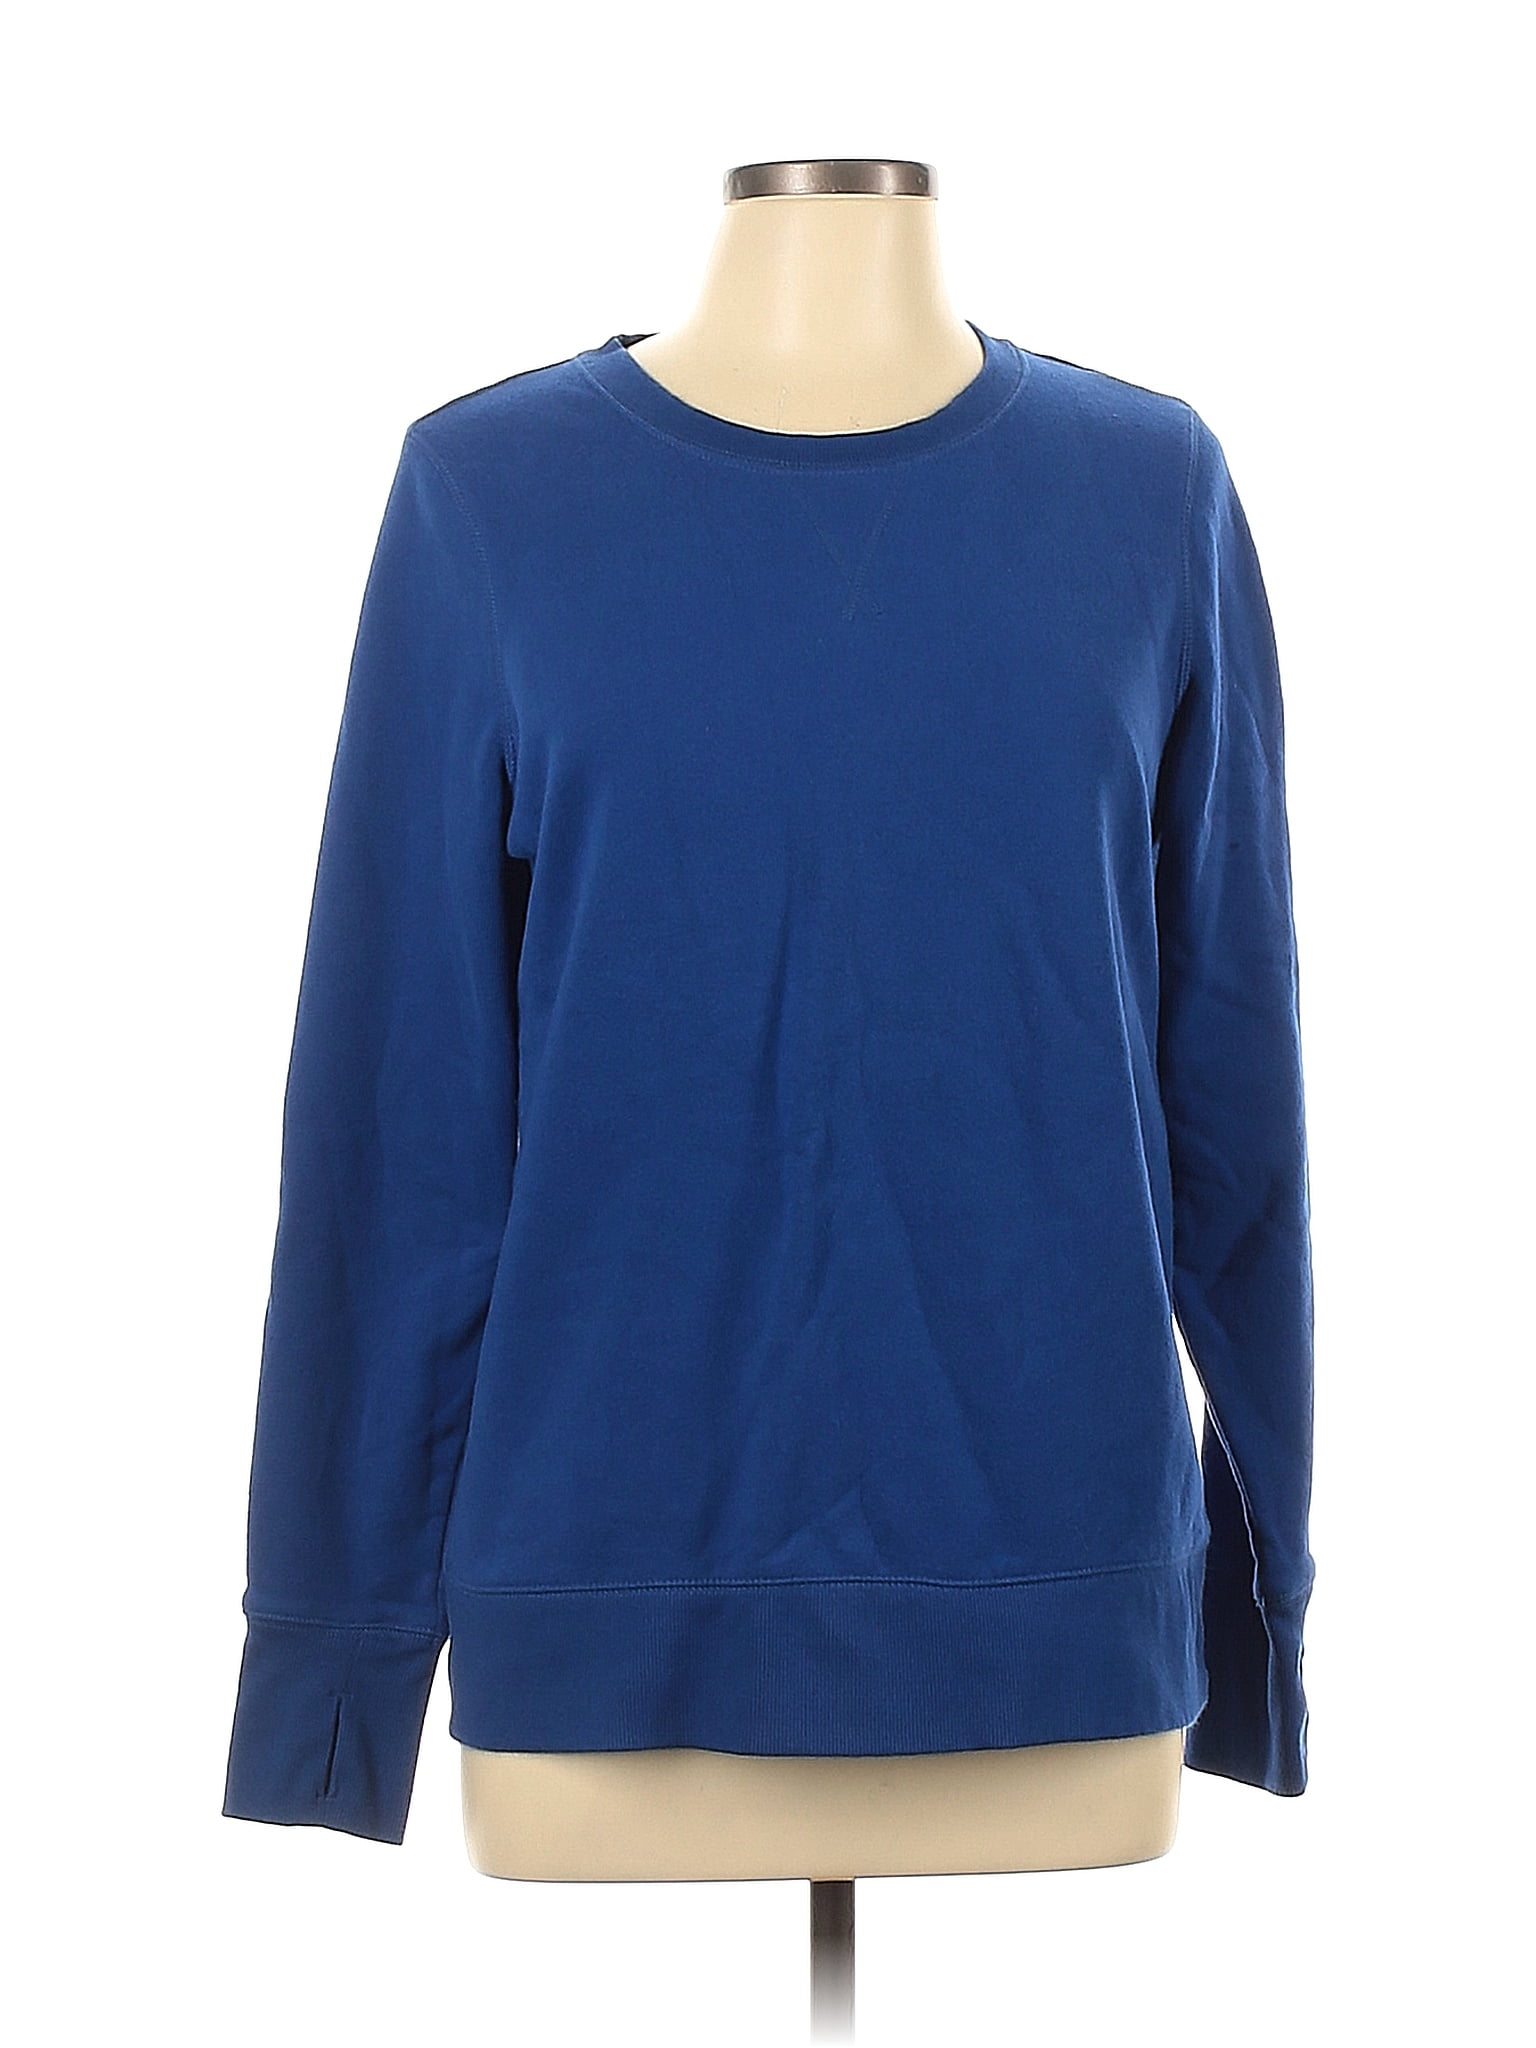 Tek Gear Solid Blue Sweatshirt Size L - 55% off | thredUP